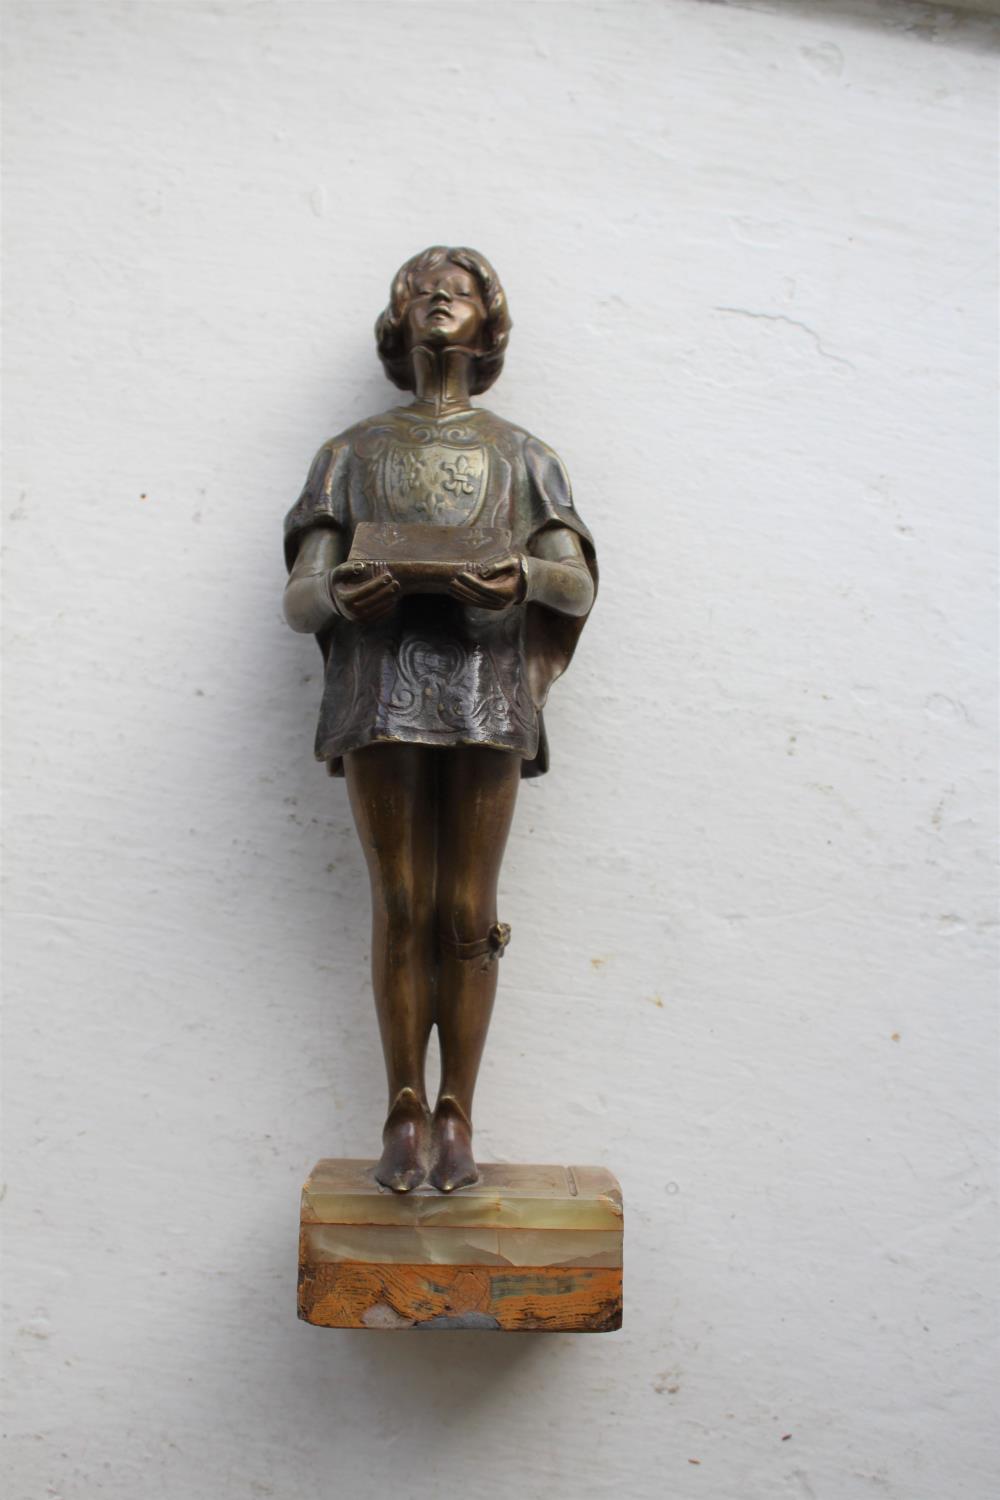 FRIEDRICH GOLDSCHEIDER BRONZE a small bronze figure of a boy in a Court uniform, and holding a - Image 3 of 12